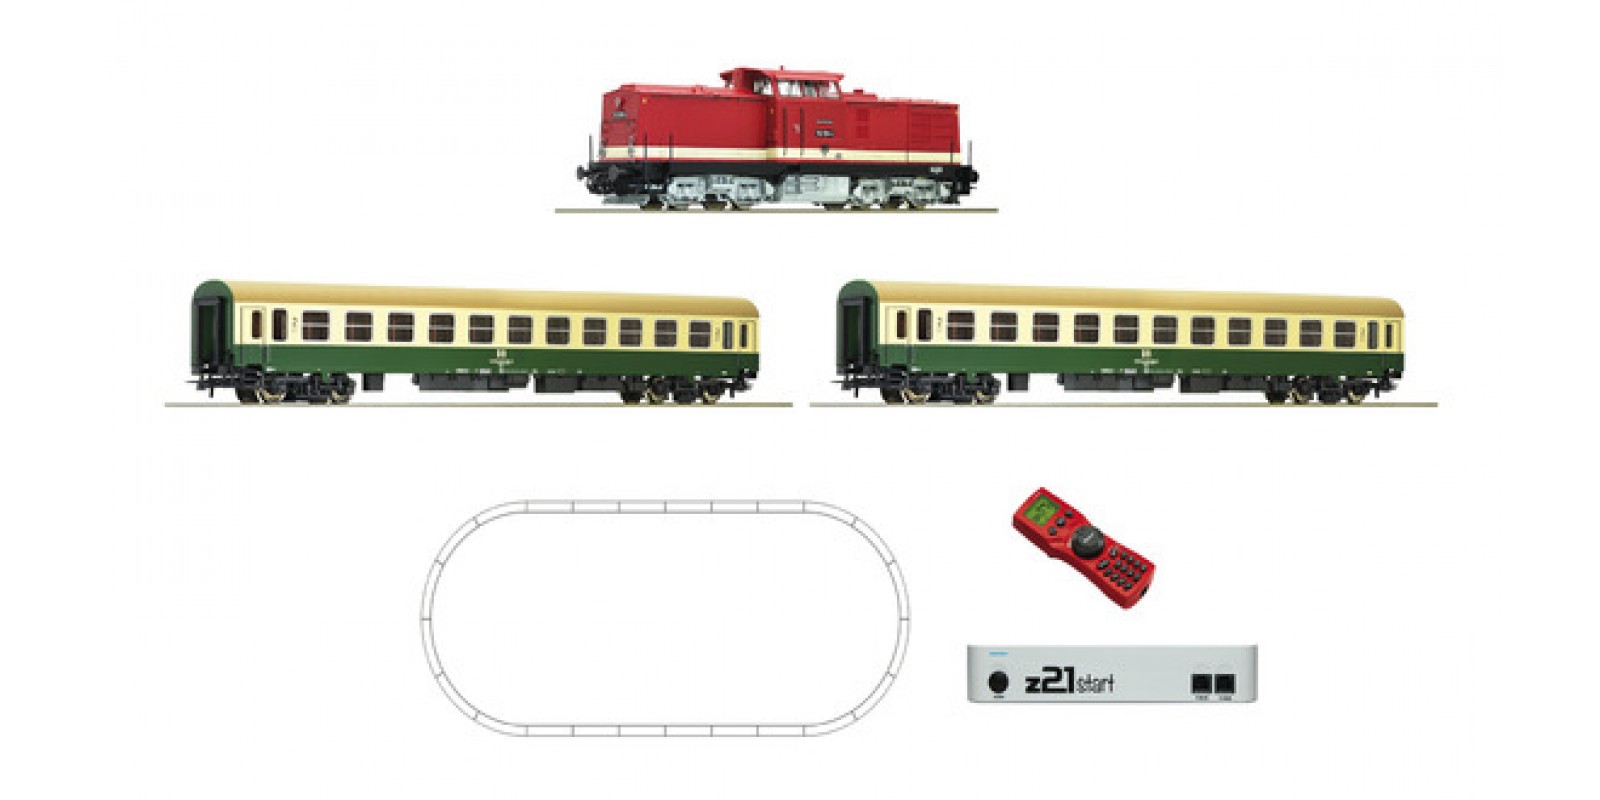 RO51284 - Digital z21 Start Set: Diesel locomotive class 112 and passenger train, DR